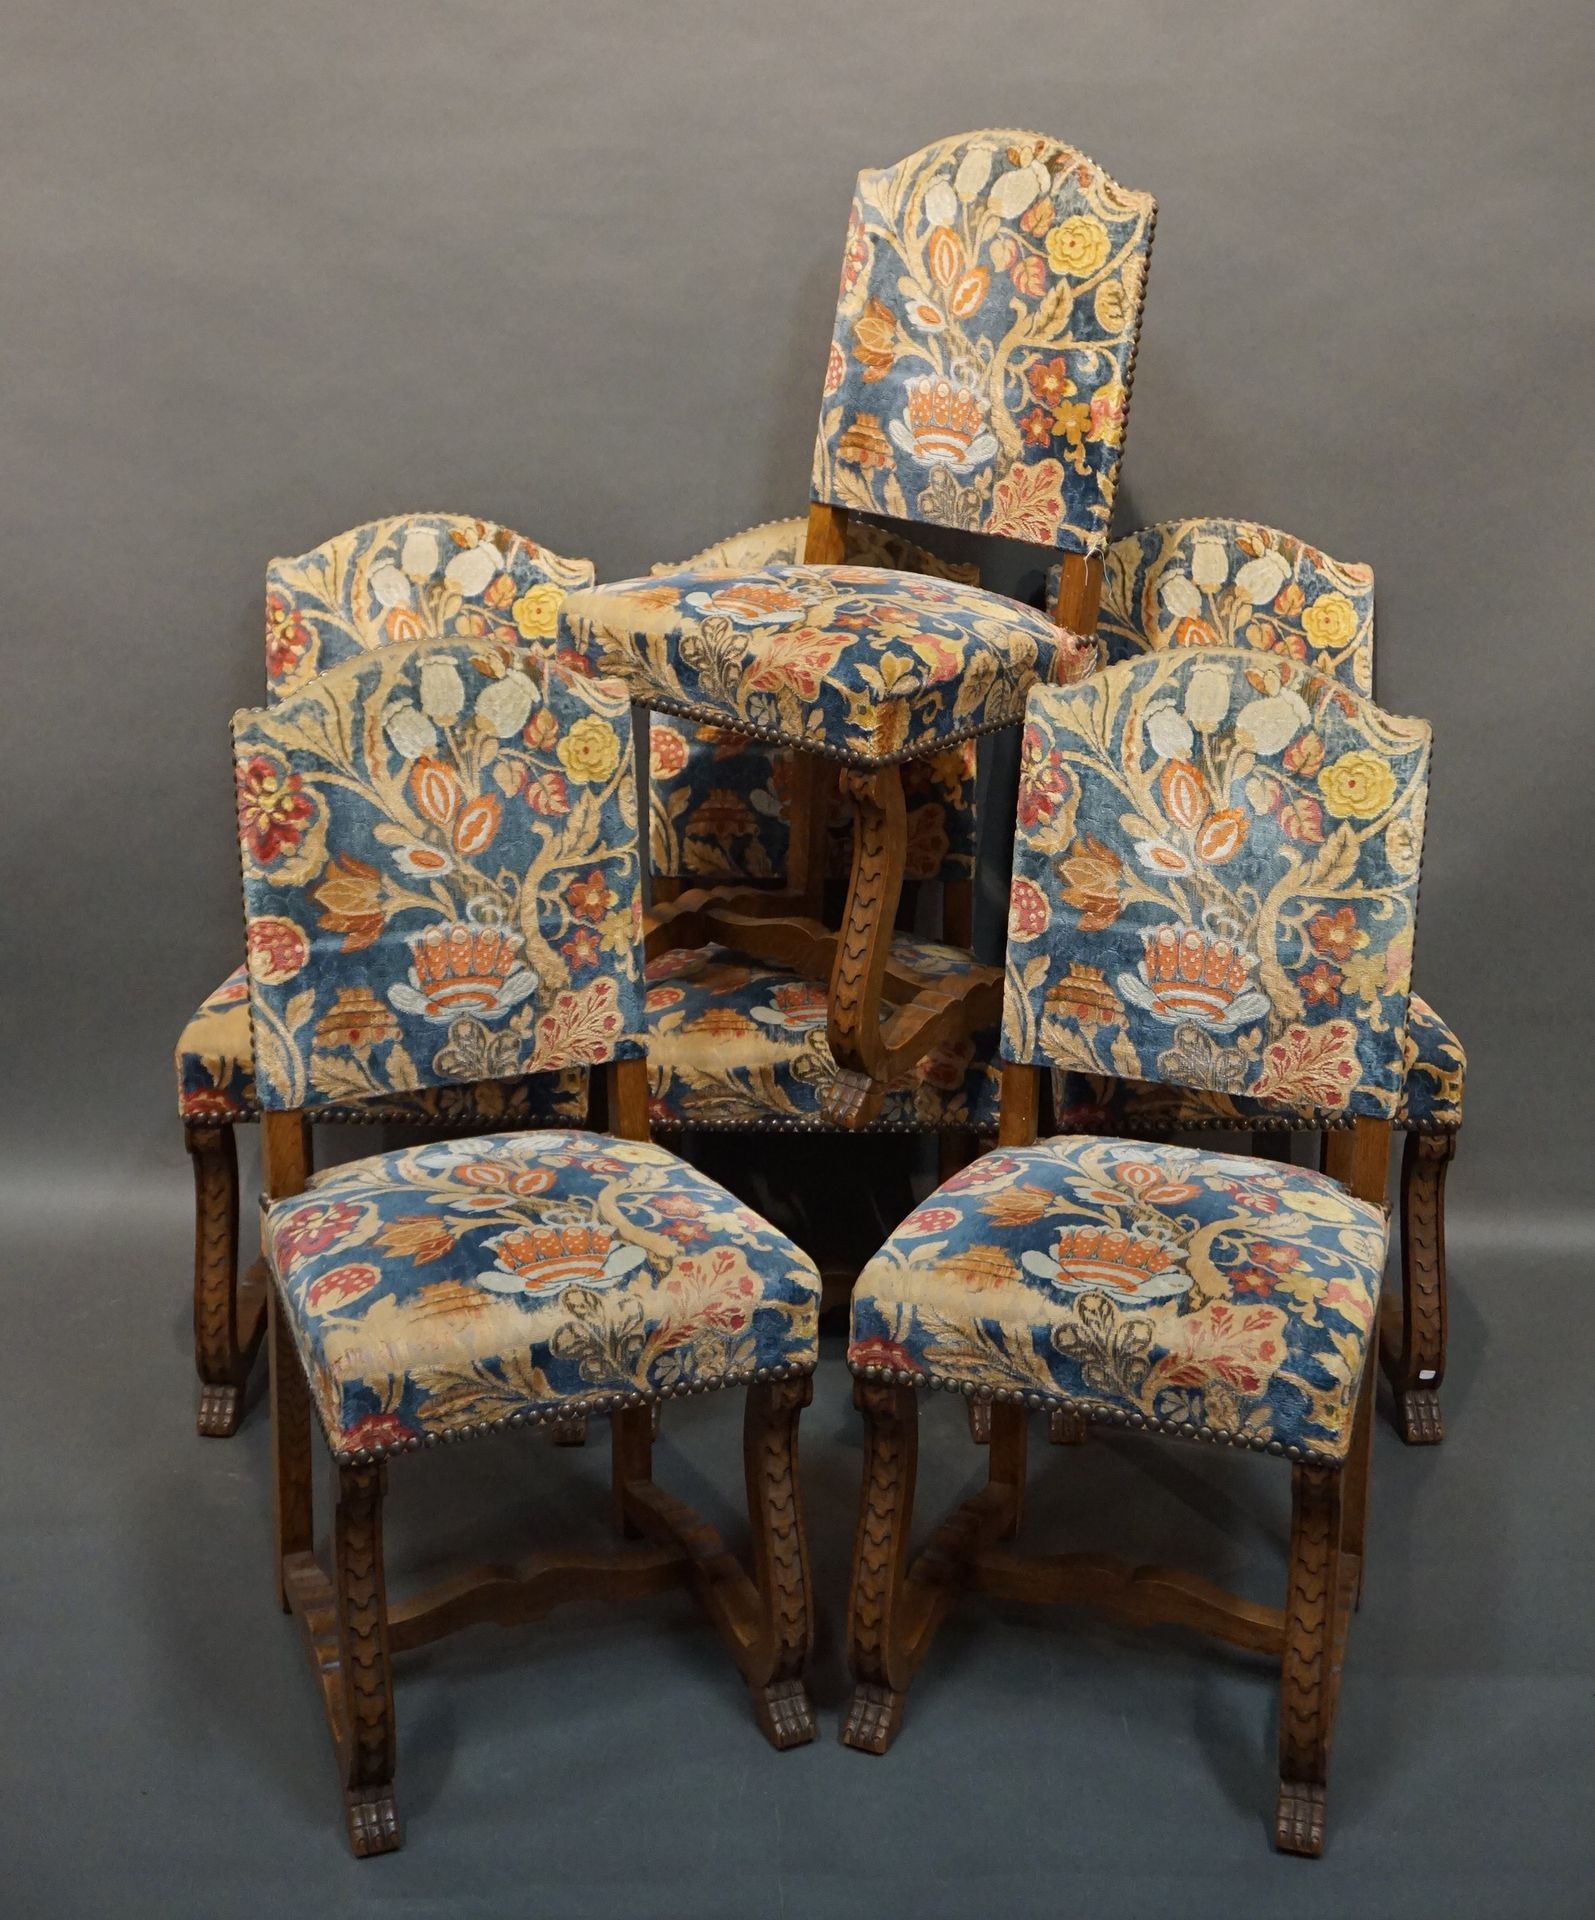 CHAISES 六把天然木雕刻的直背椅，用挂毯装饰。亨利二世风格，102x49x50厘米